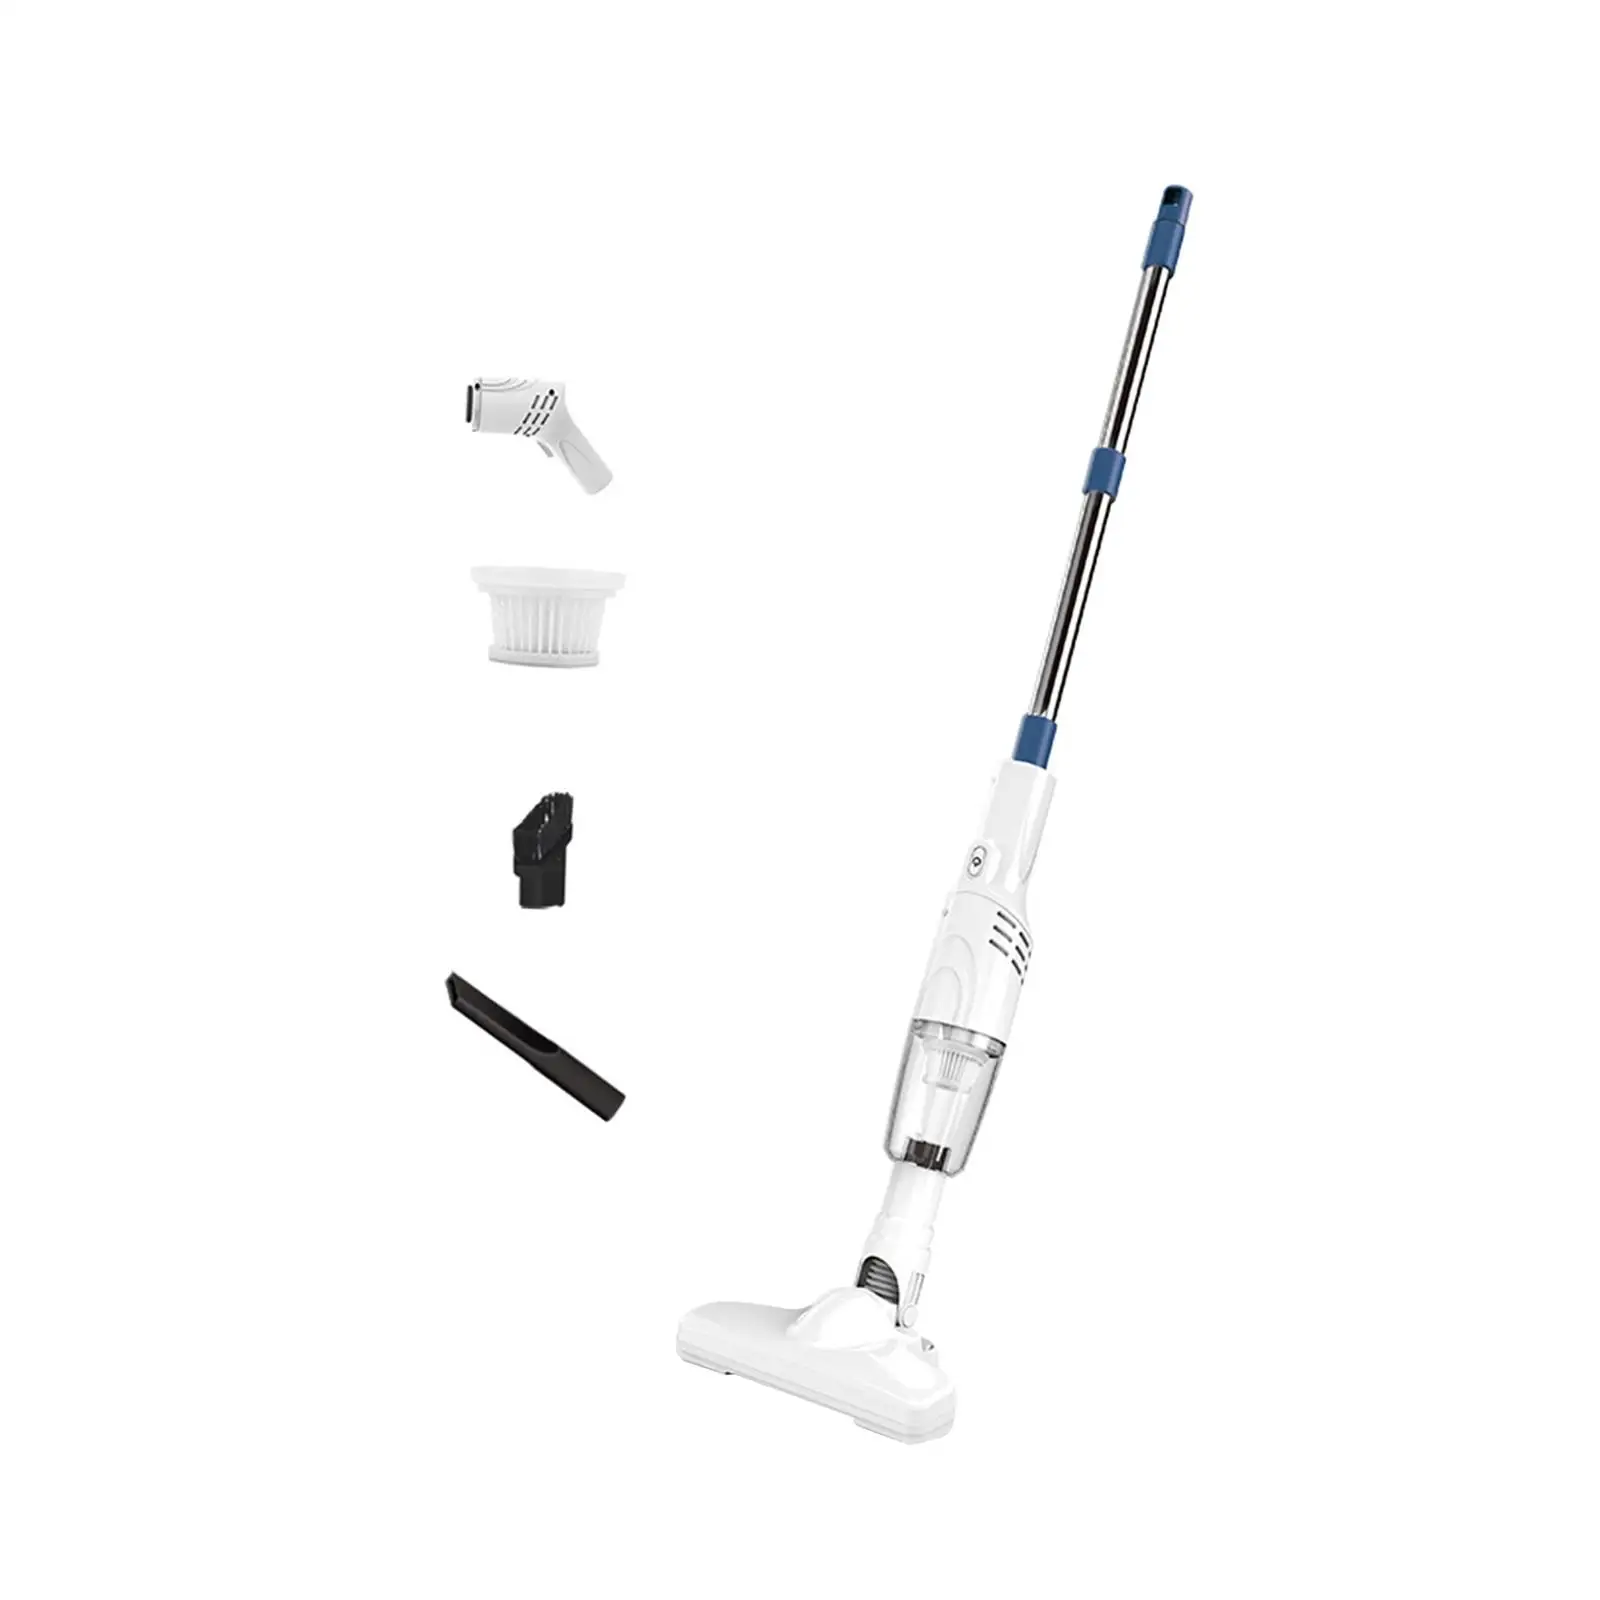 Car Vacuum Cleaner Lightweight with Nozzles Duster Handheld Vacuum Cleaner Portable Mini Vacuum for Car Sofa Office Desk Pillows